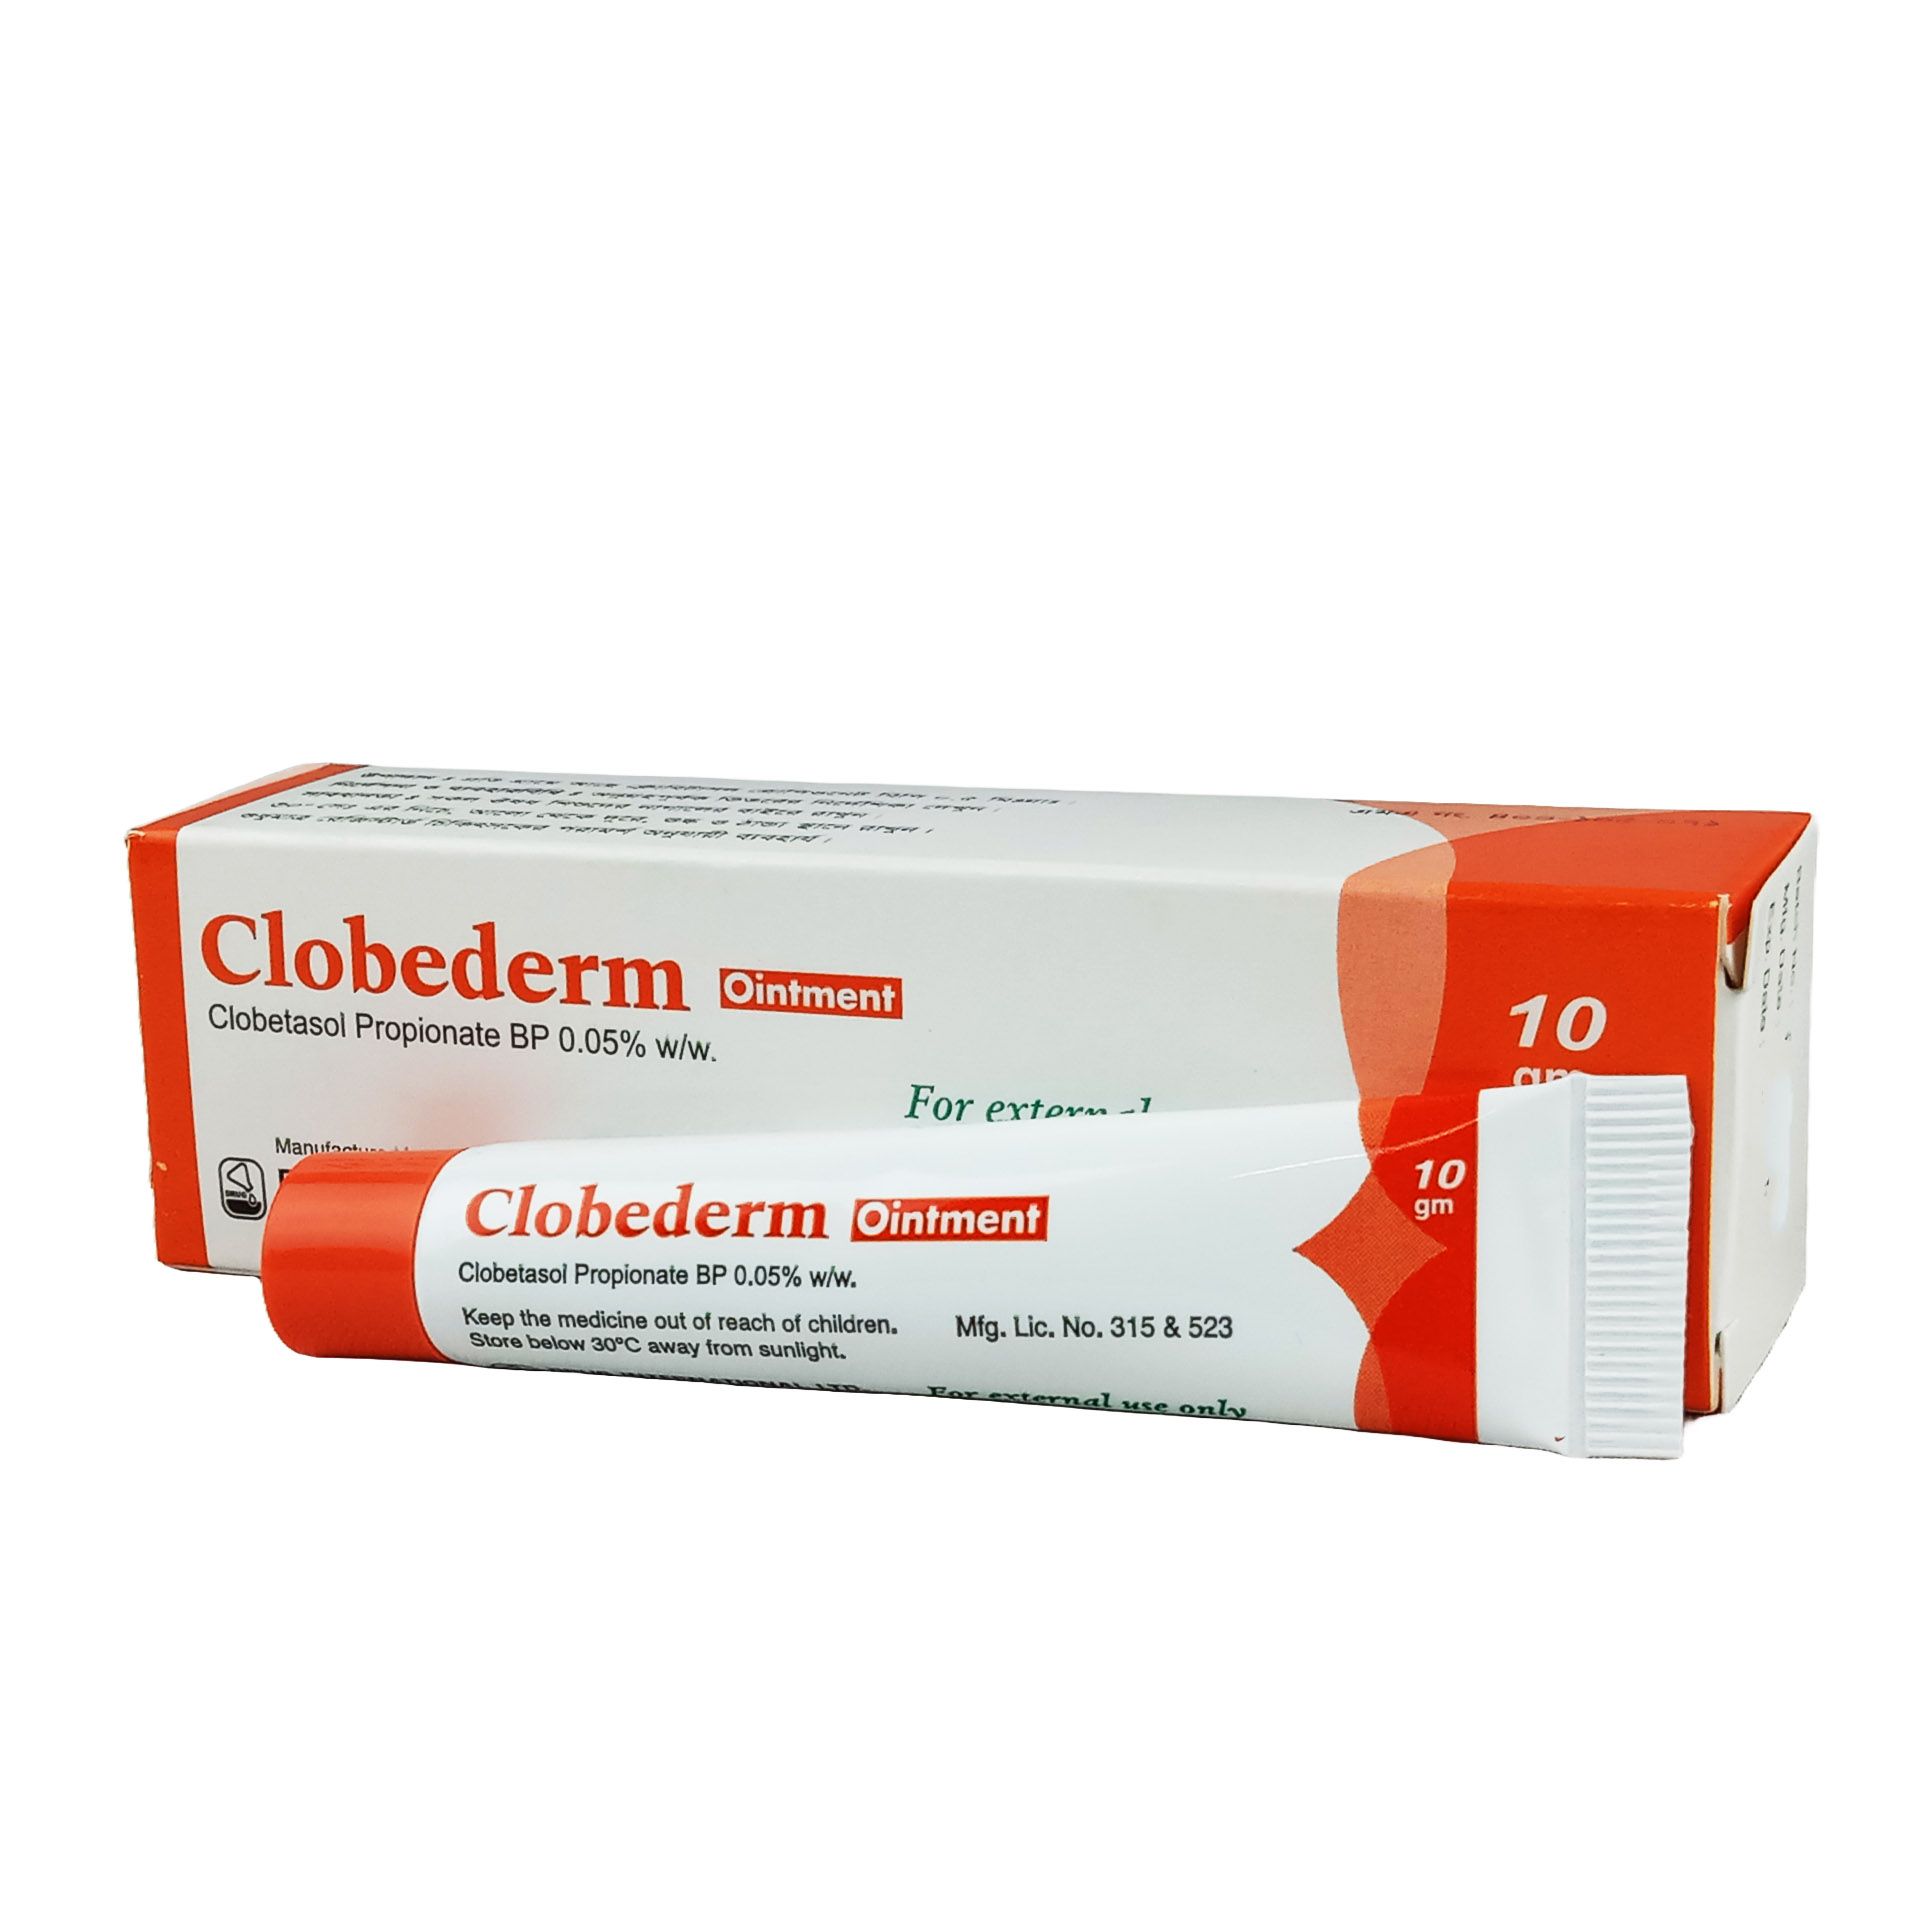 Clobederm 0.05% Ointment